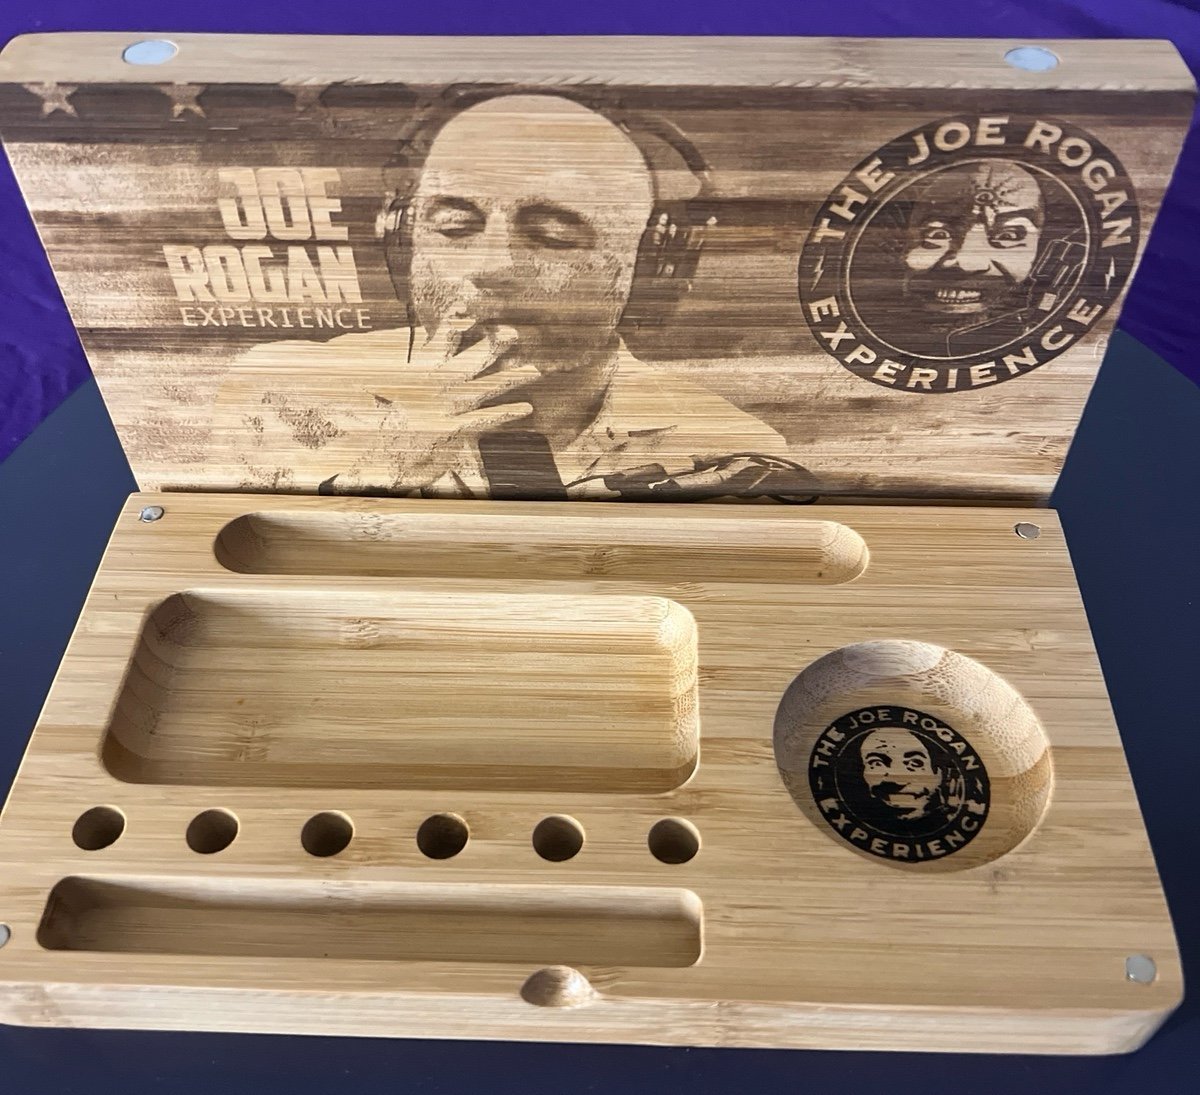 Joe Rogan laser engraved magnet back flip style rolling tray 9XCmS7DYg